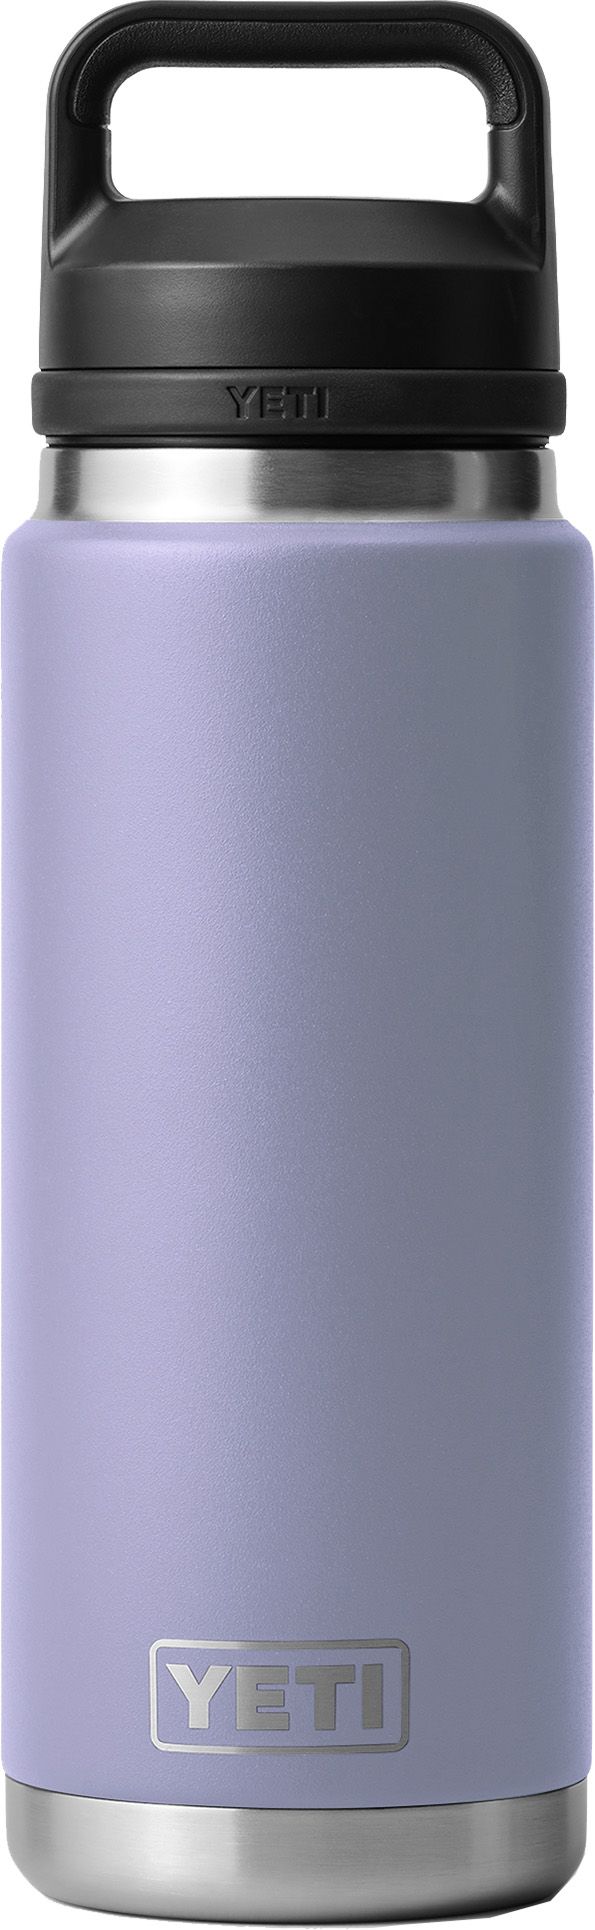 Photos - Other Accessories Yeti 26 oz. Rambler Bottle with Chug Cap, Cosmic Lilac 20YETURMBLR26ZBTTHY 